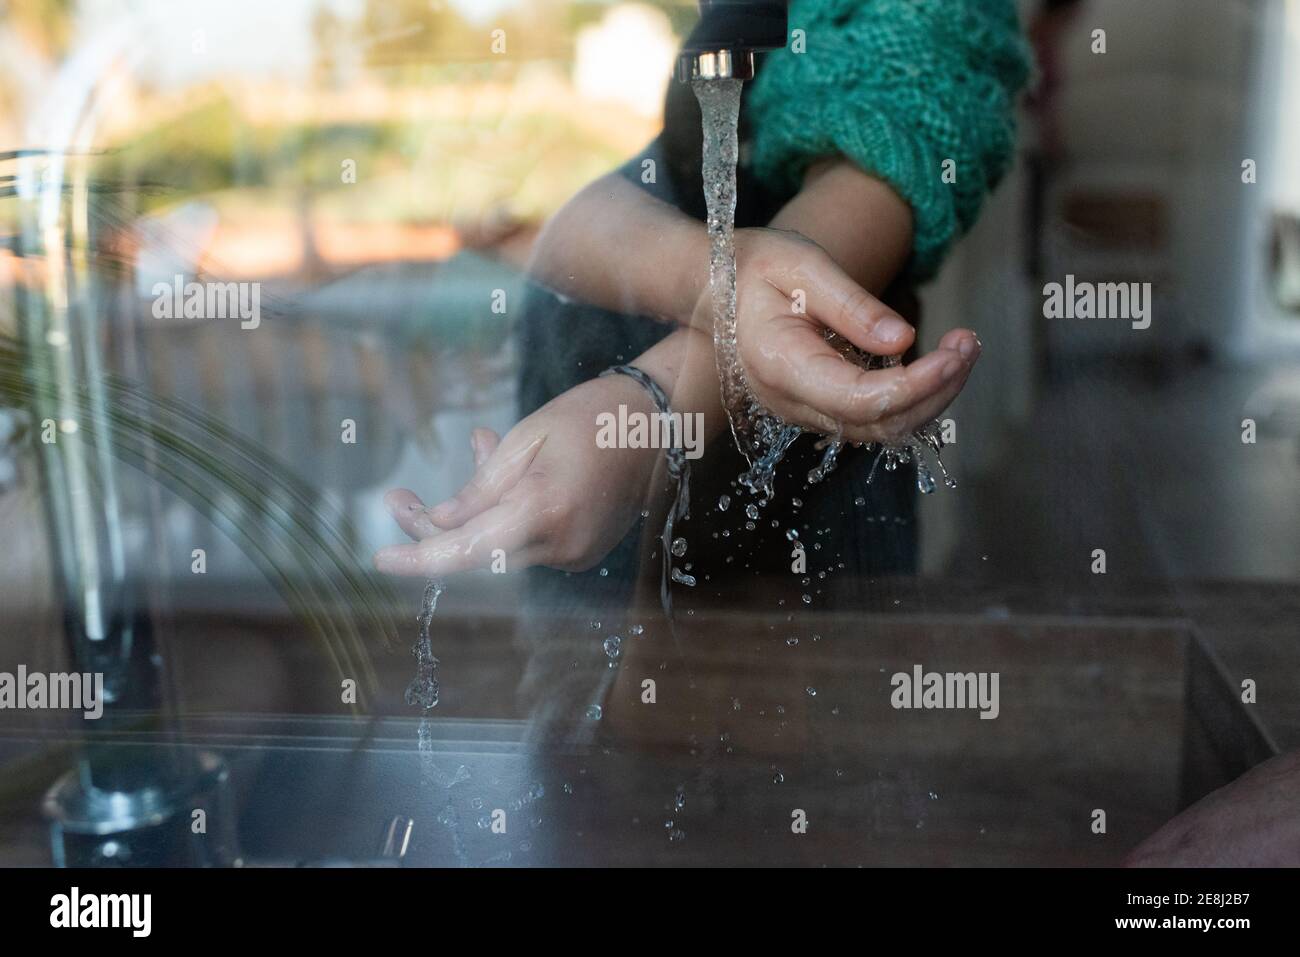 Through glass of crop unrecognizable kid washing hands under running water in sink in kitchen Stock Photo